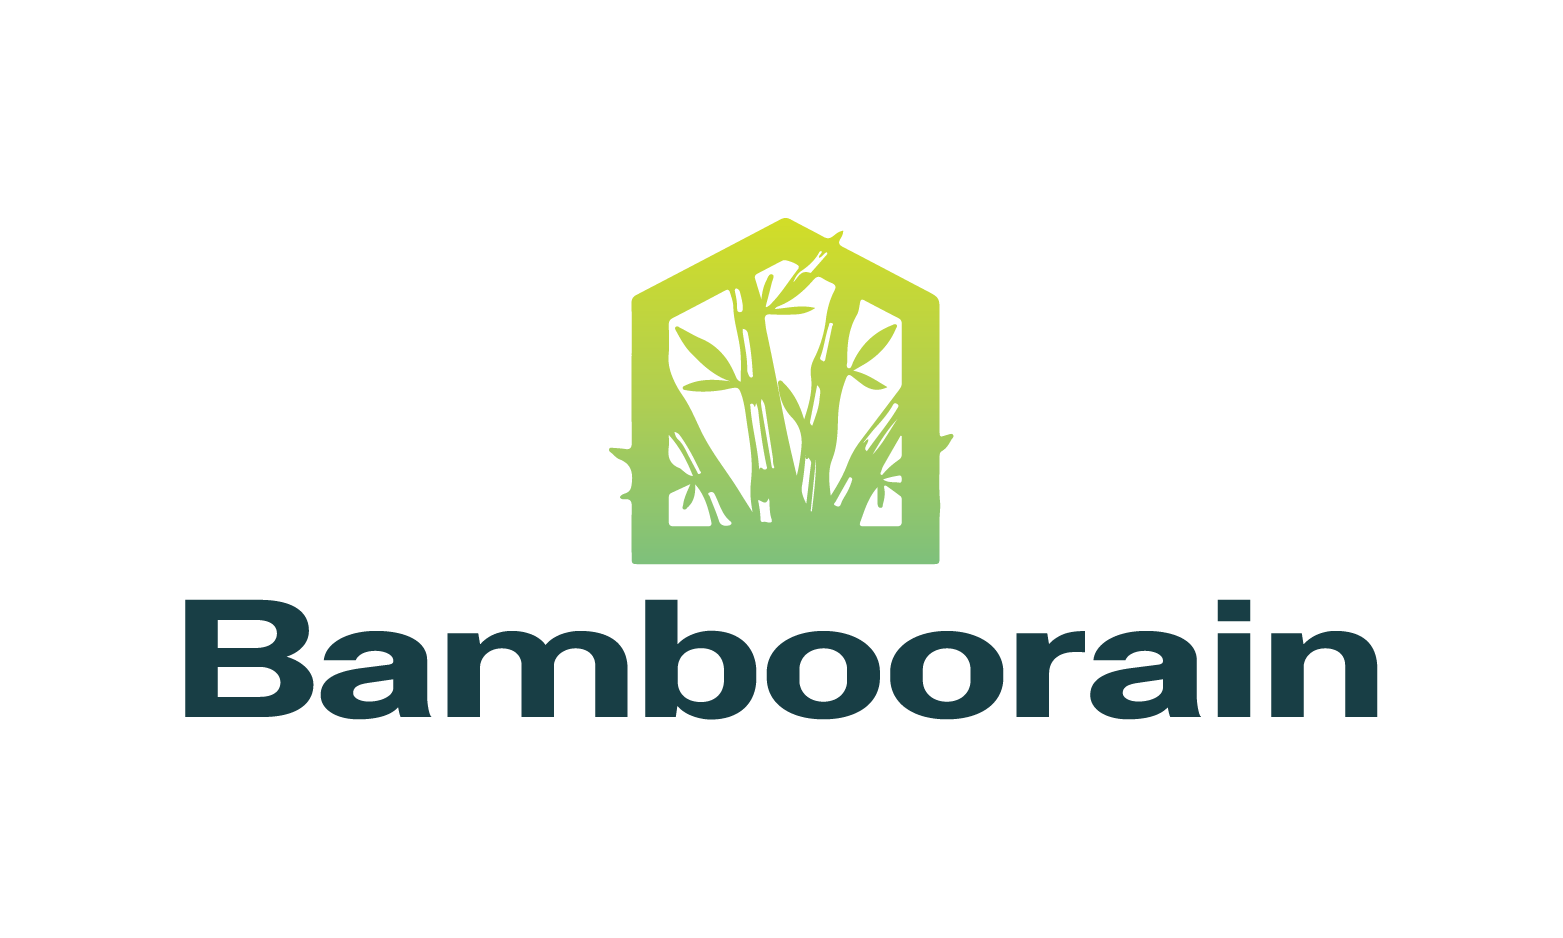 Bamboorain.com - Creative brandable domain for sale